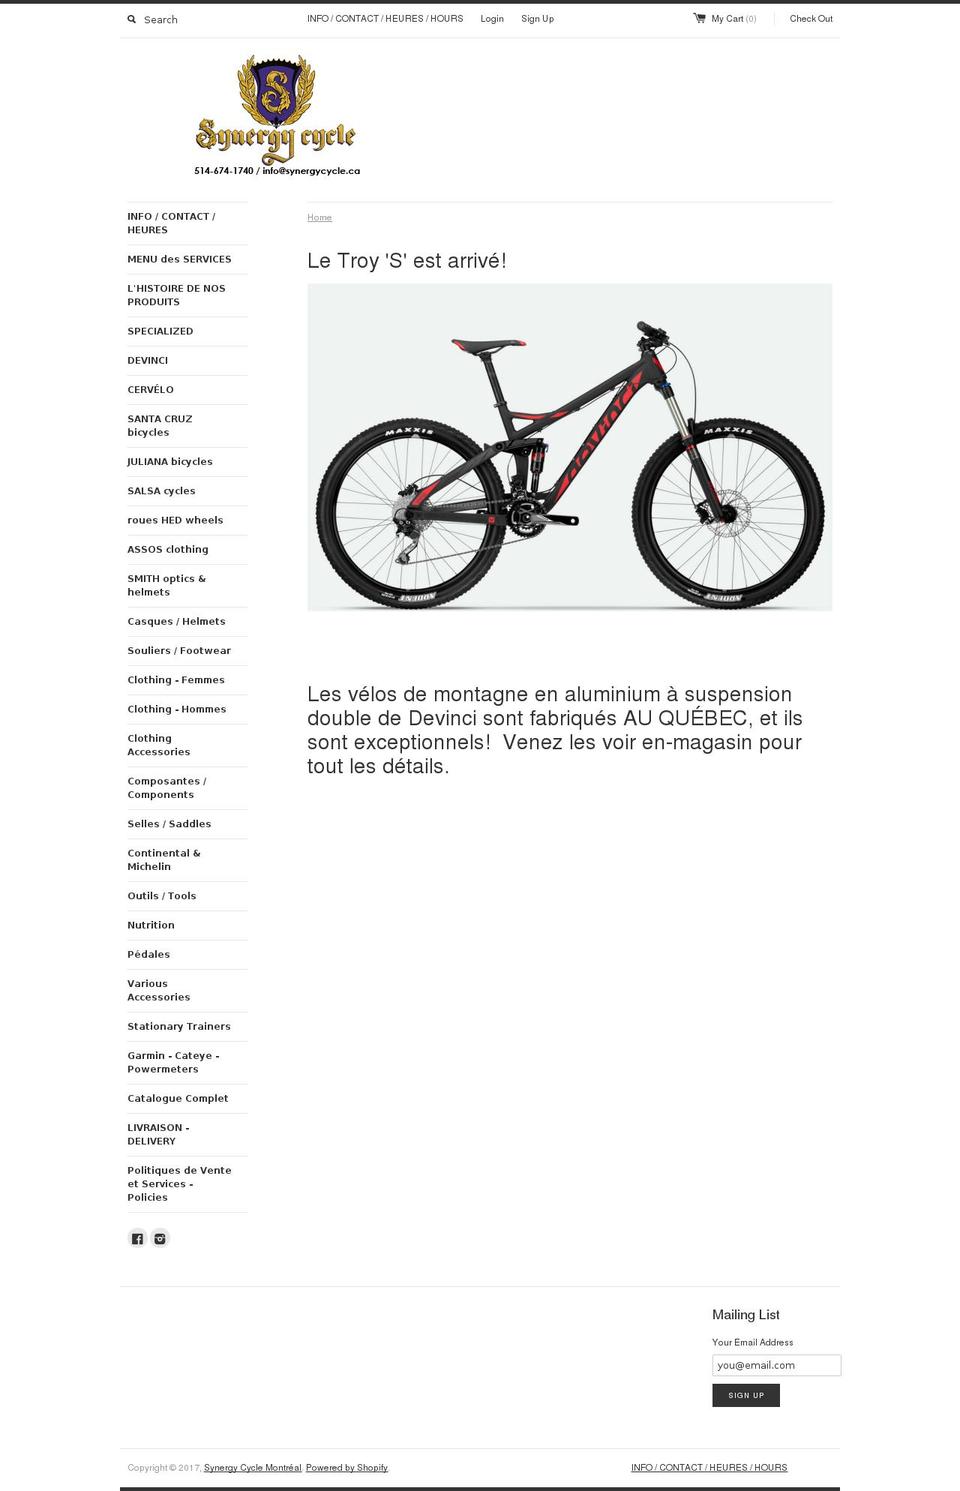 synergycycle.ca shopify website screenshot